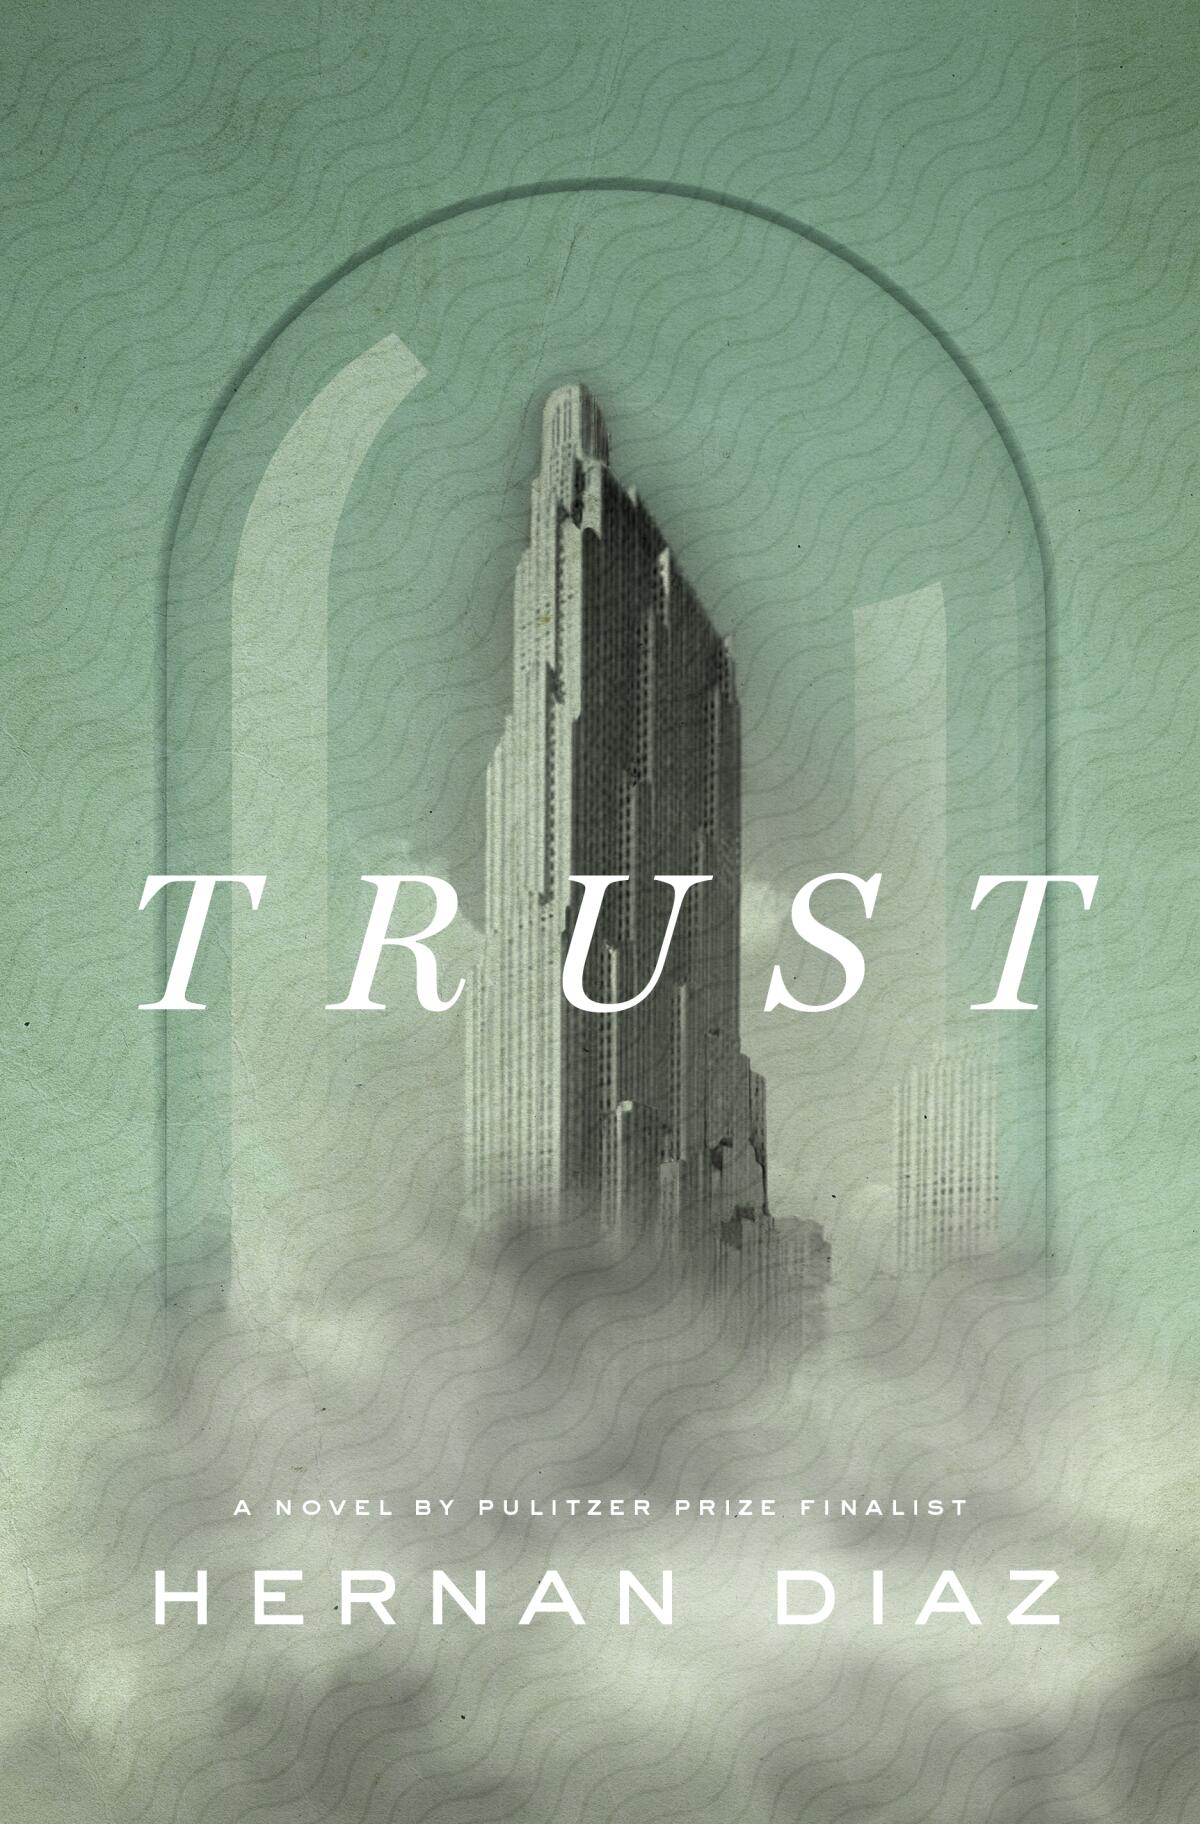 "Trust" by Hernan Diaz, cover shows skyscraper encased in glass 